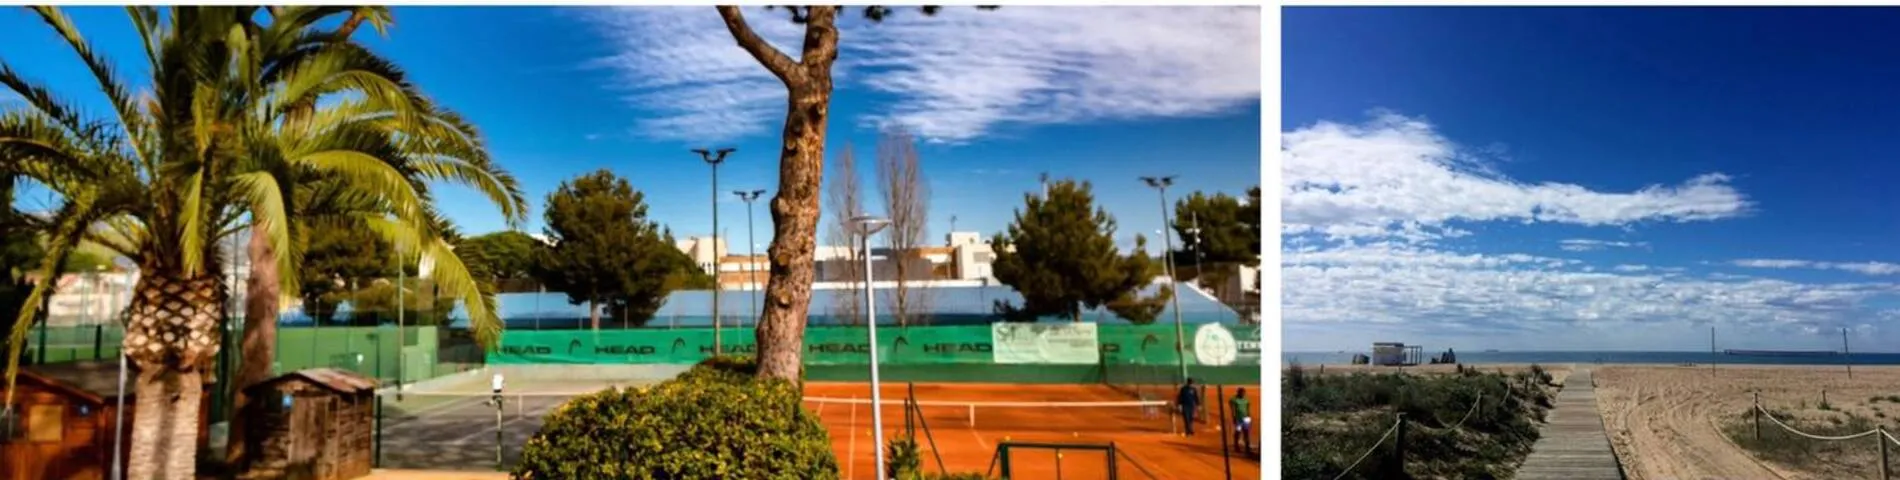 Barcelona Tennis Academy bilde 1